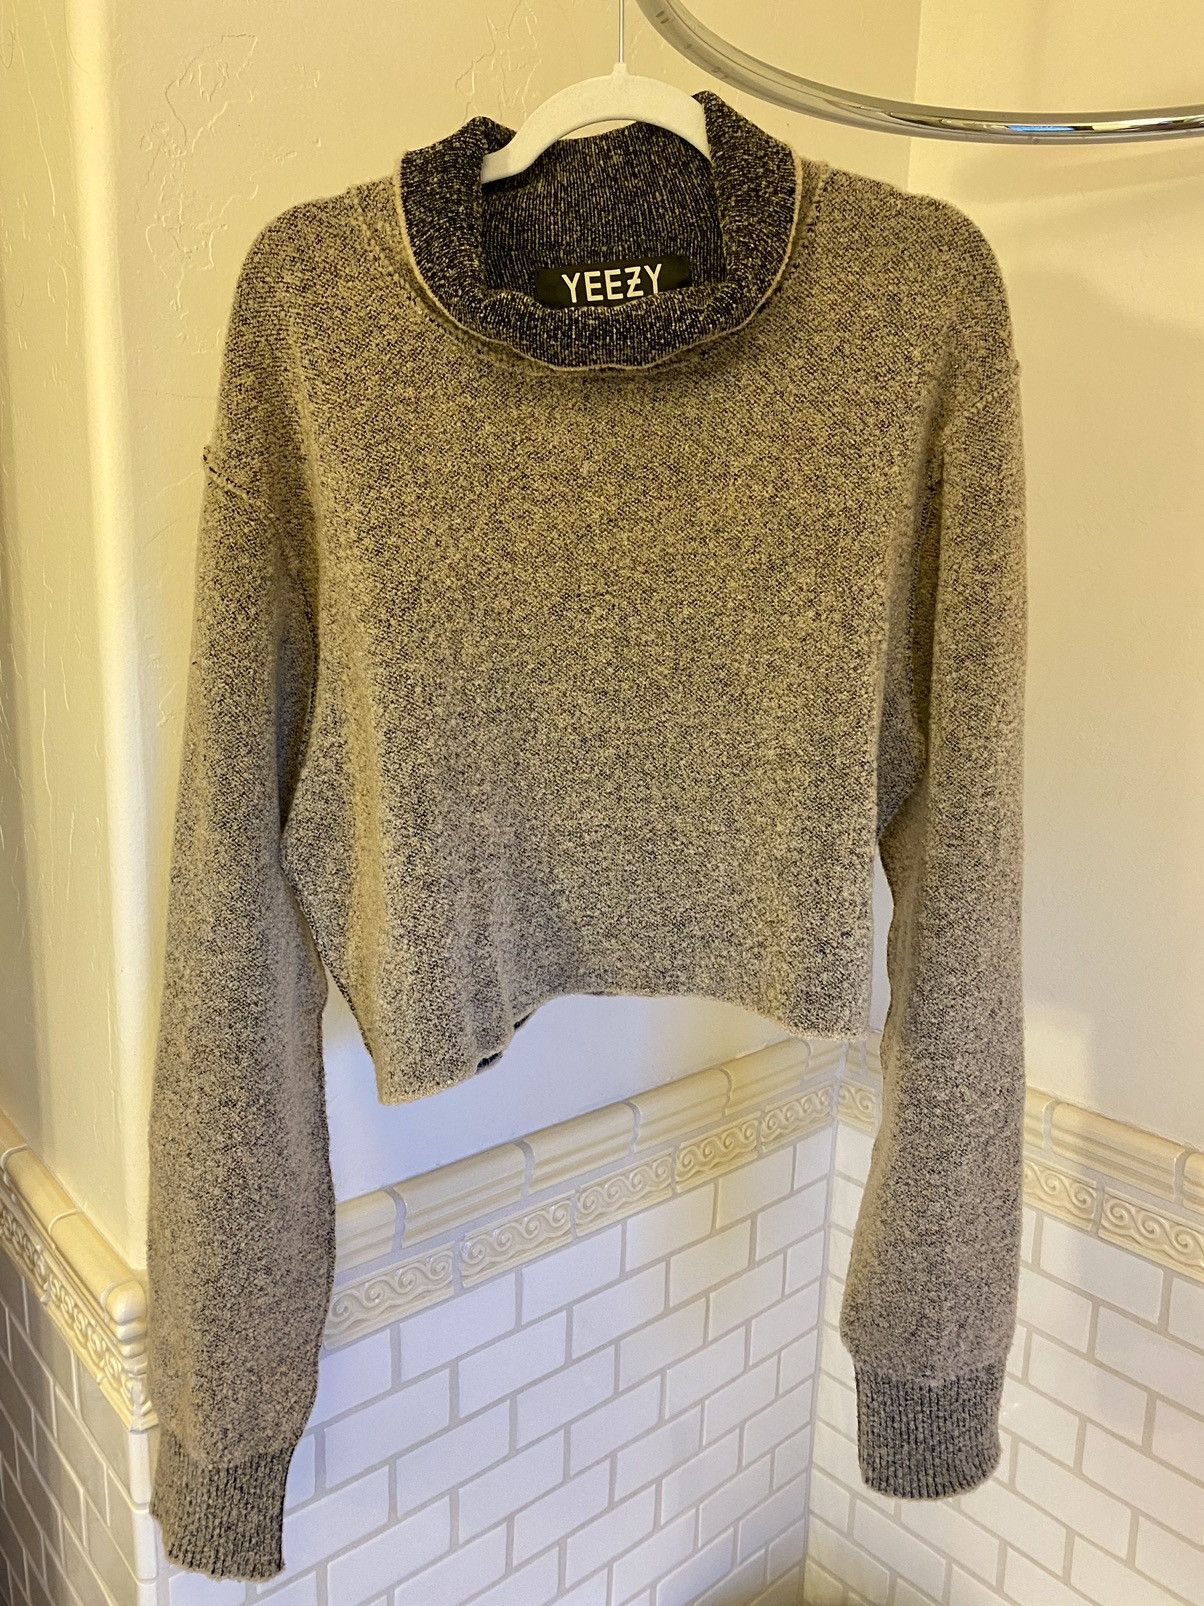 Yeezy 1 Boucle Sweater | Grailed